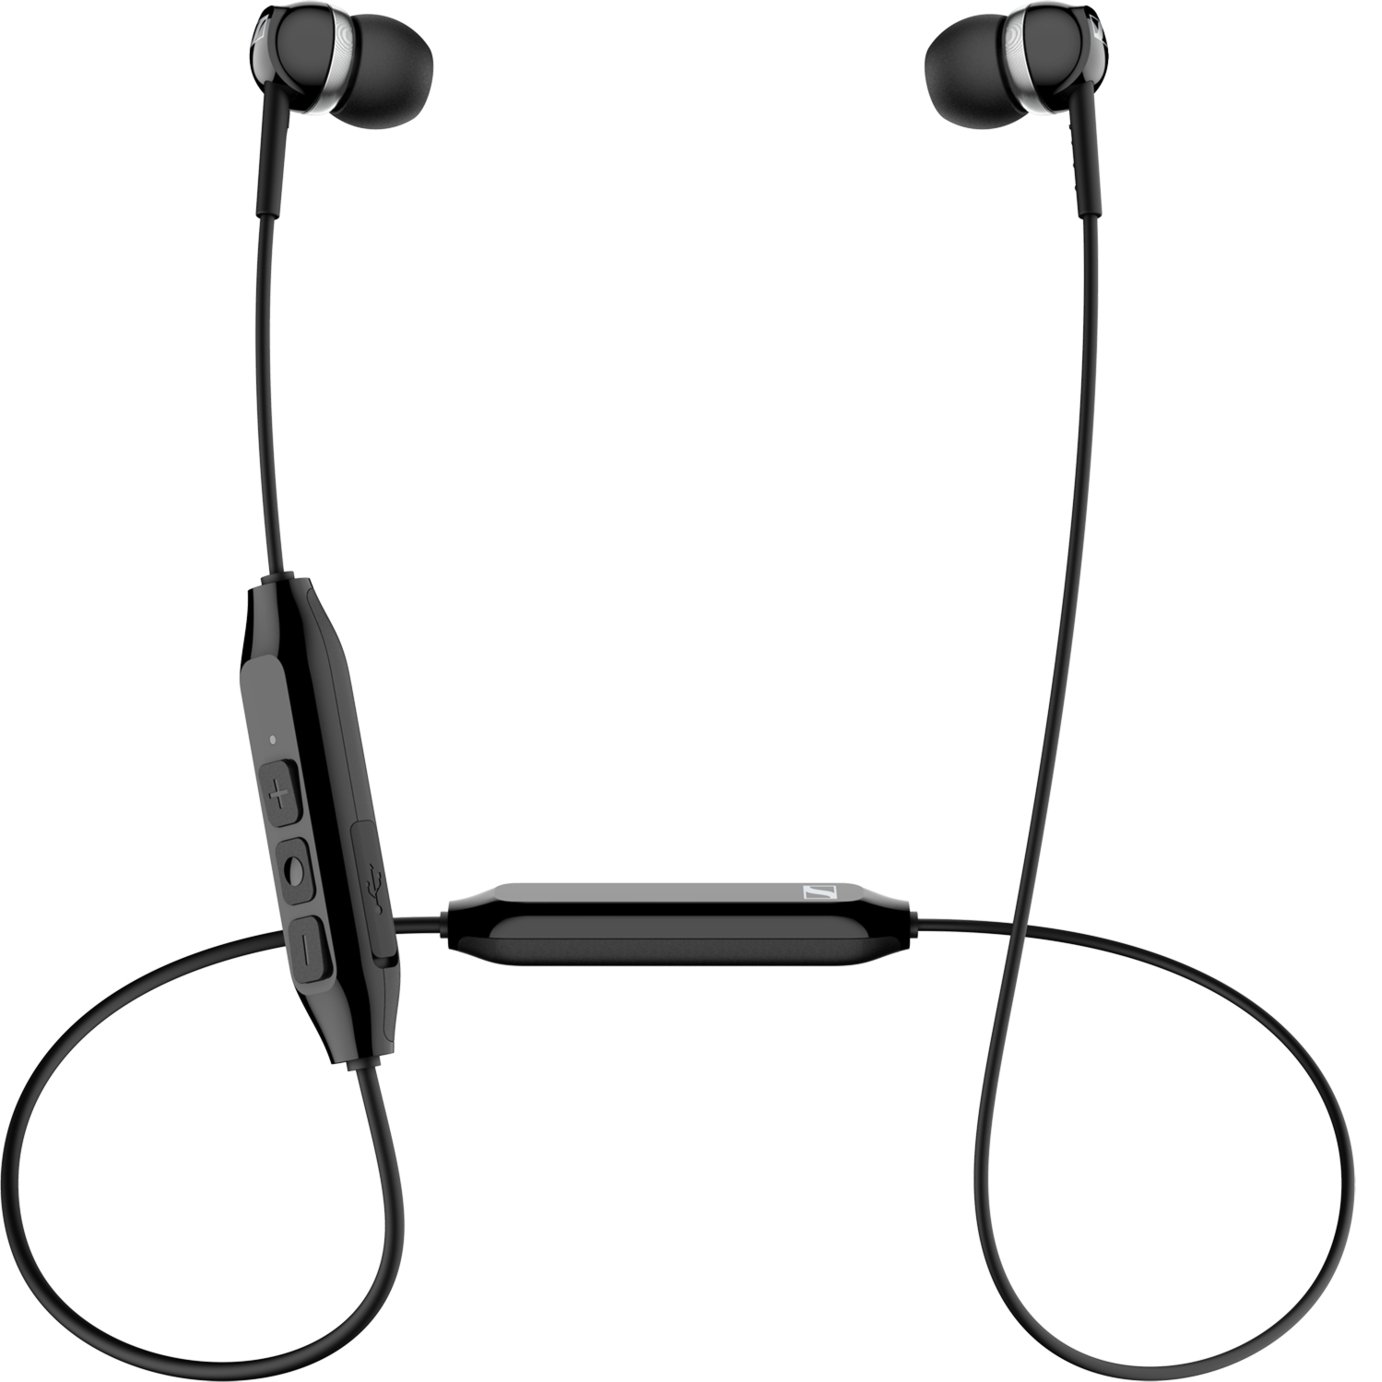 Sennheiser CX 150BT In-Ear Wireless Headphones Review